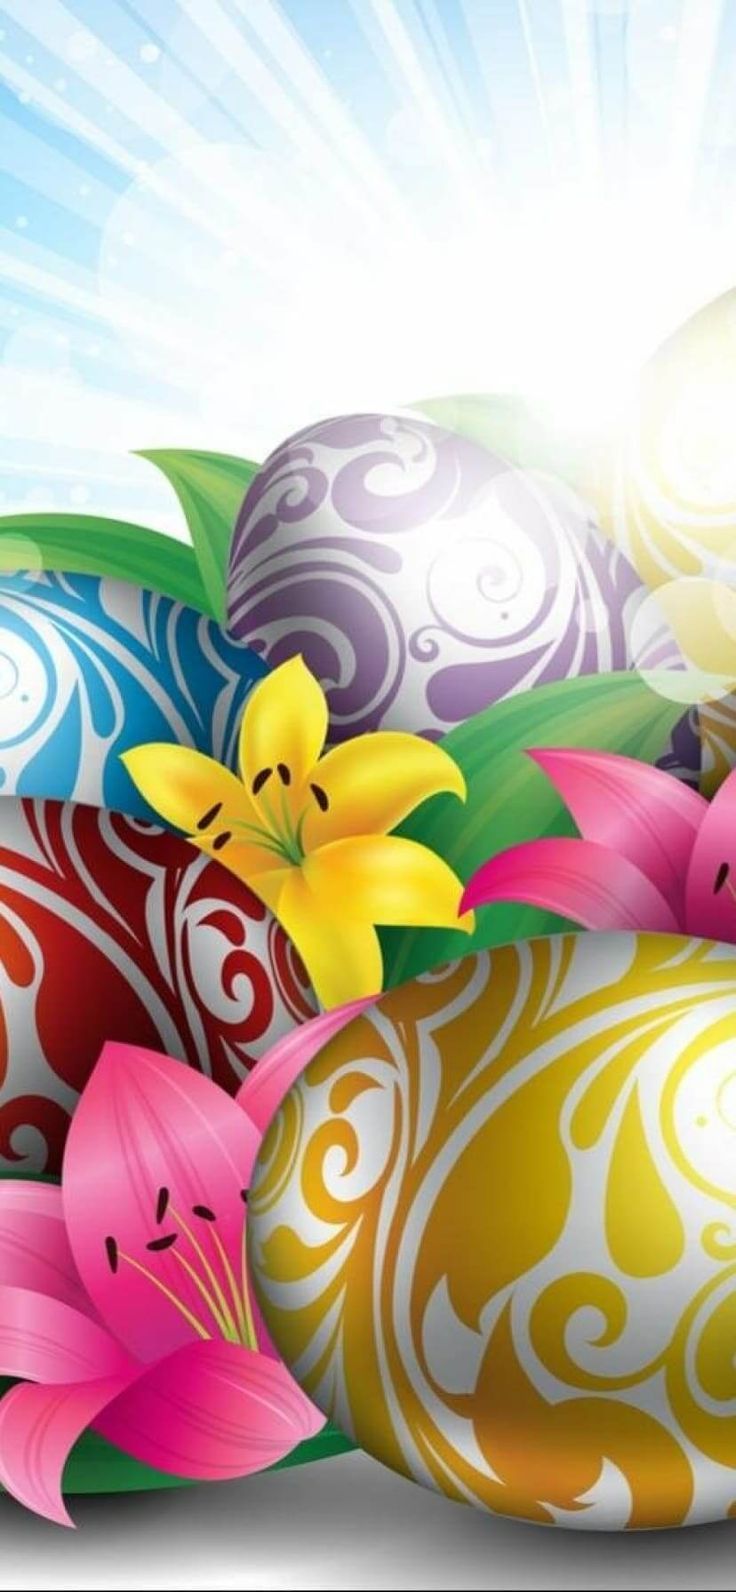 4K Happy Easter Wallpaper iPhone 13 pro max Background. Easter wallpaper, Happy easter wallpaper, iPhone wallpaper easter